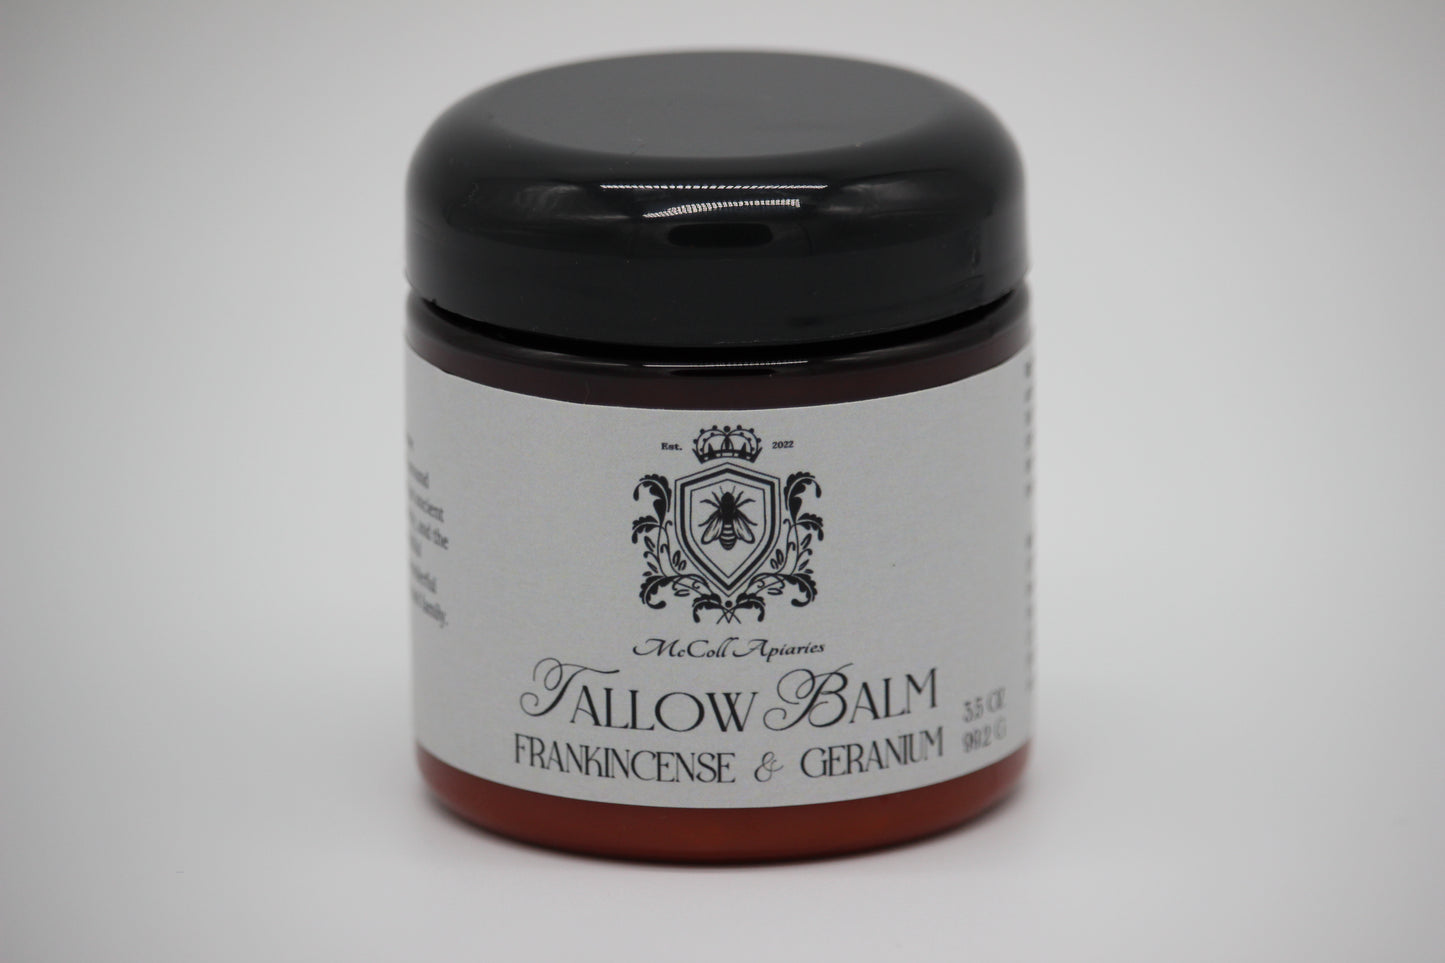 frankincense and geranium tallow balm